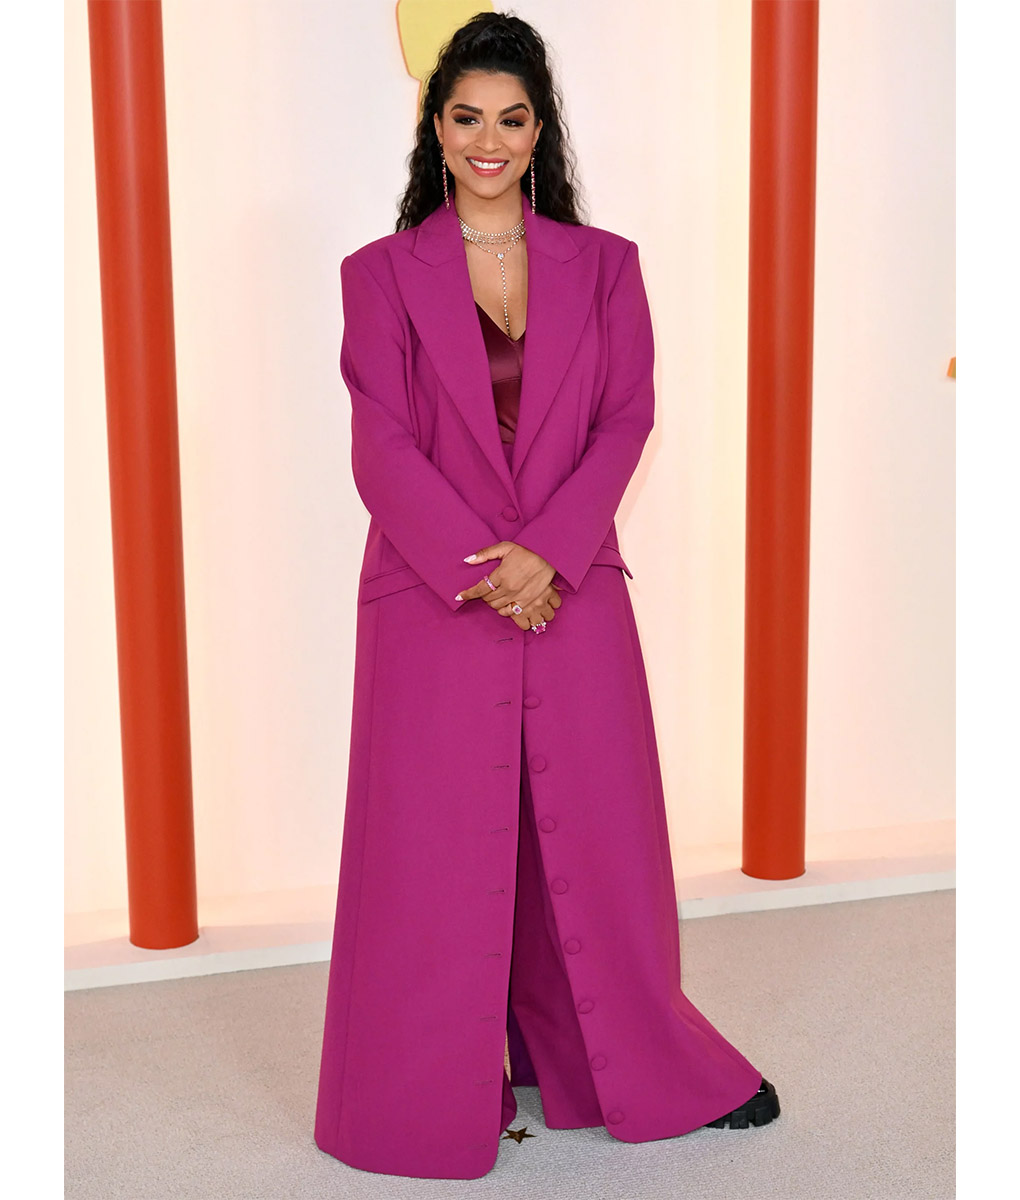 Lilly Singh Oscar Awards 2023 Pink Coat